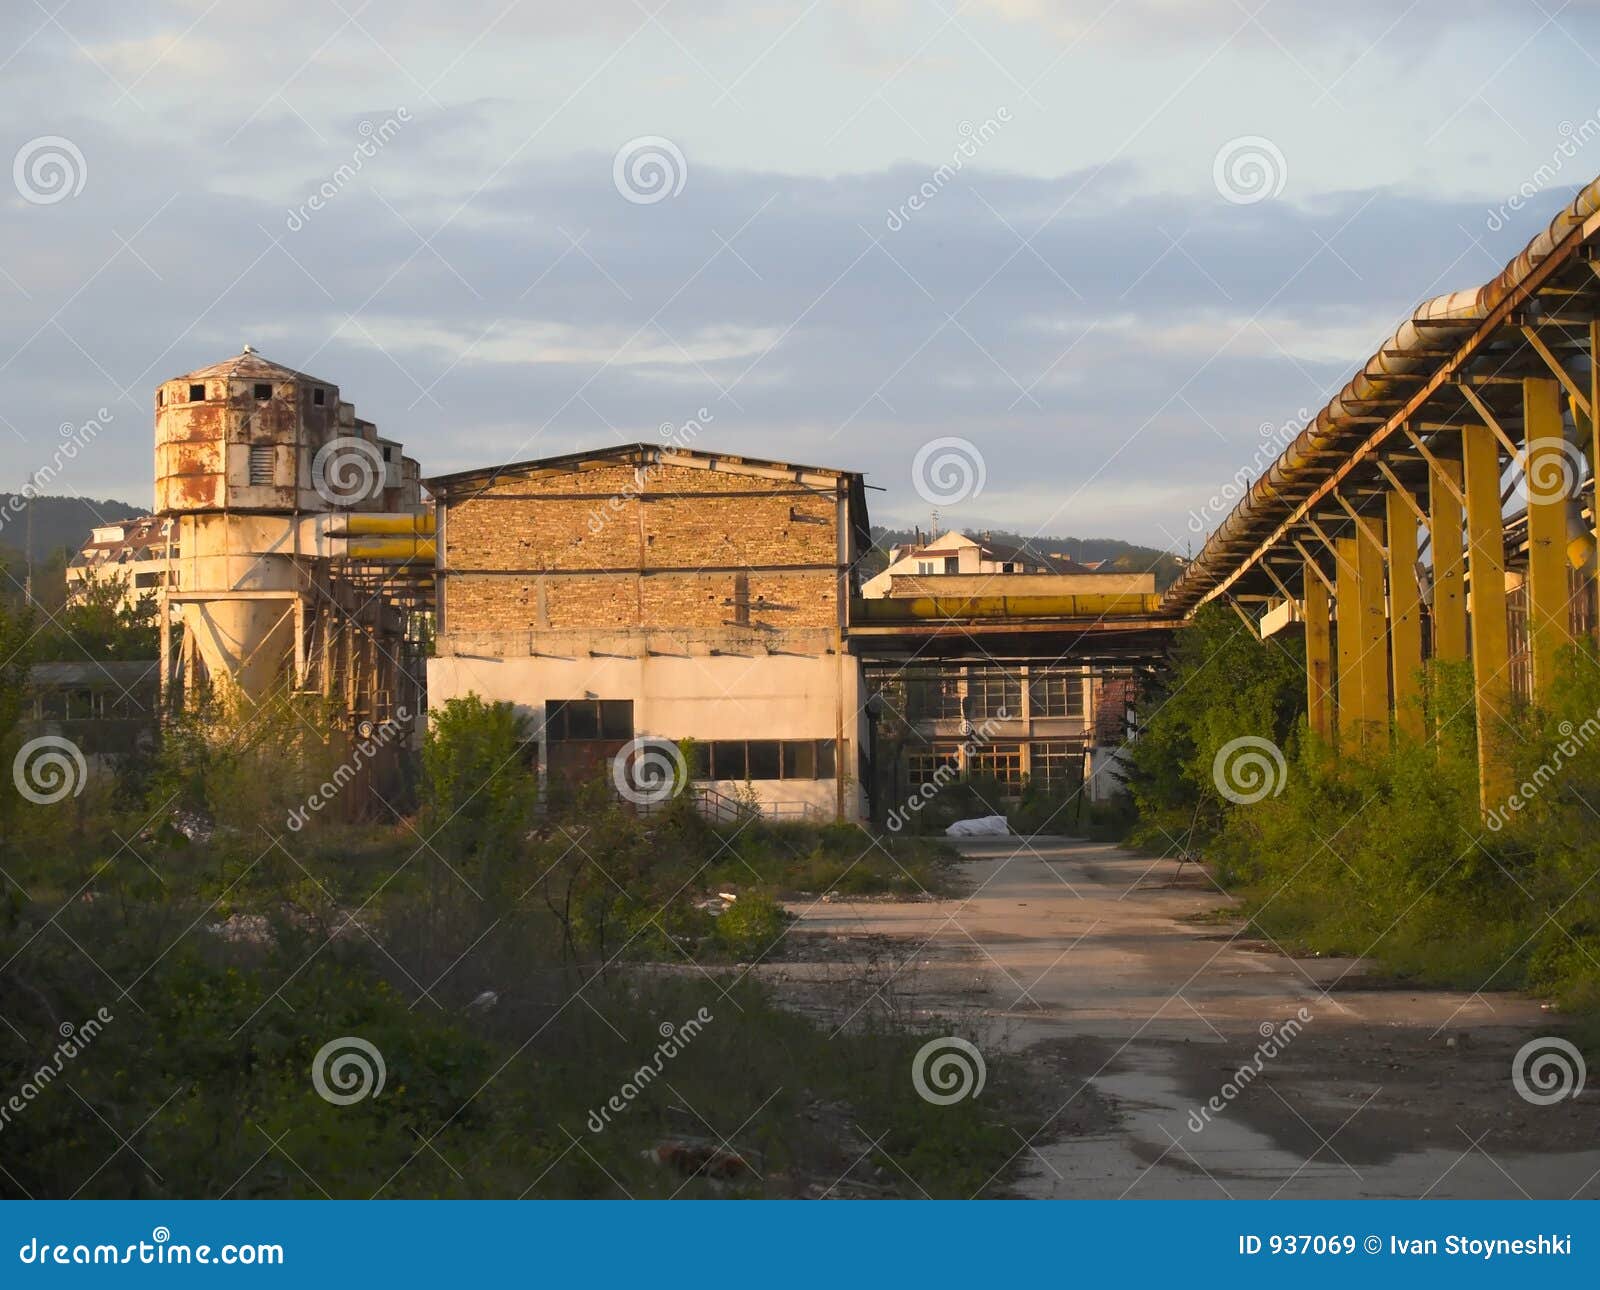 deserted industrial plant